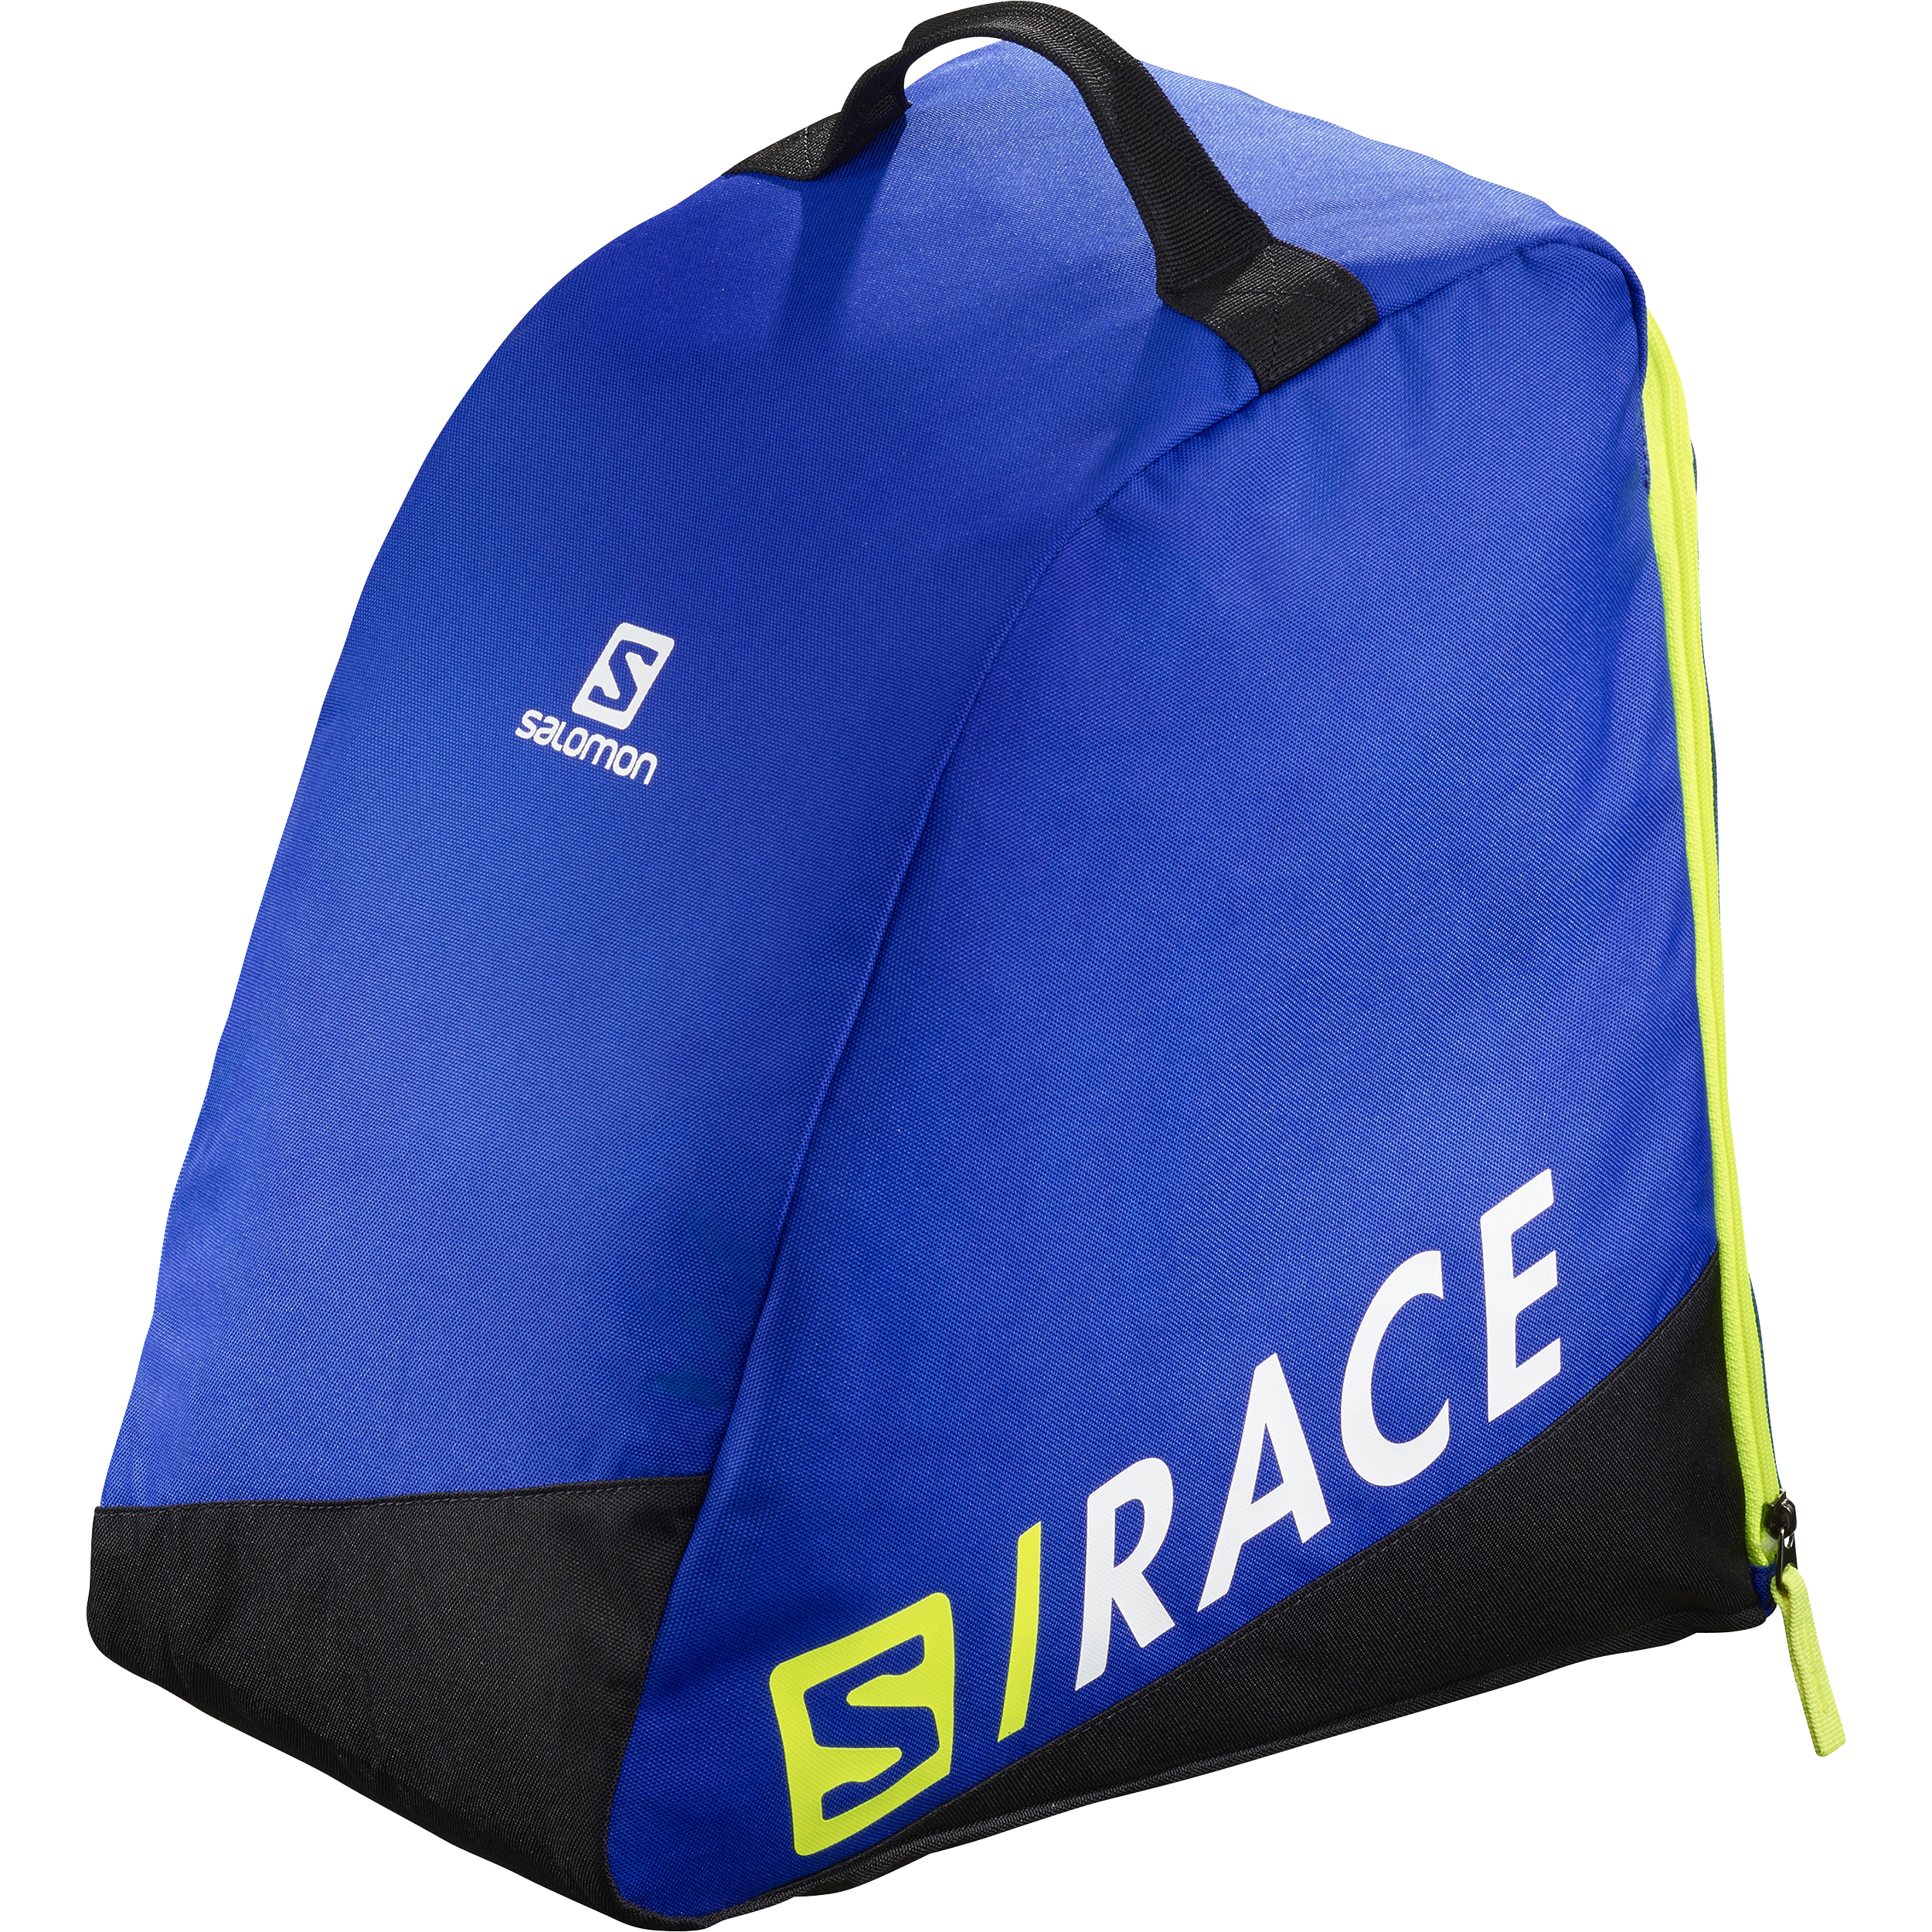 Formuler til Exert Bootbag Blue - Ski and Bootbags - weareskiers